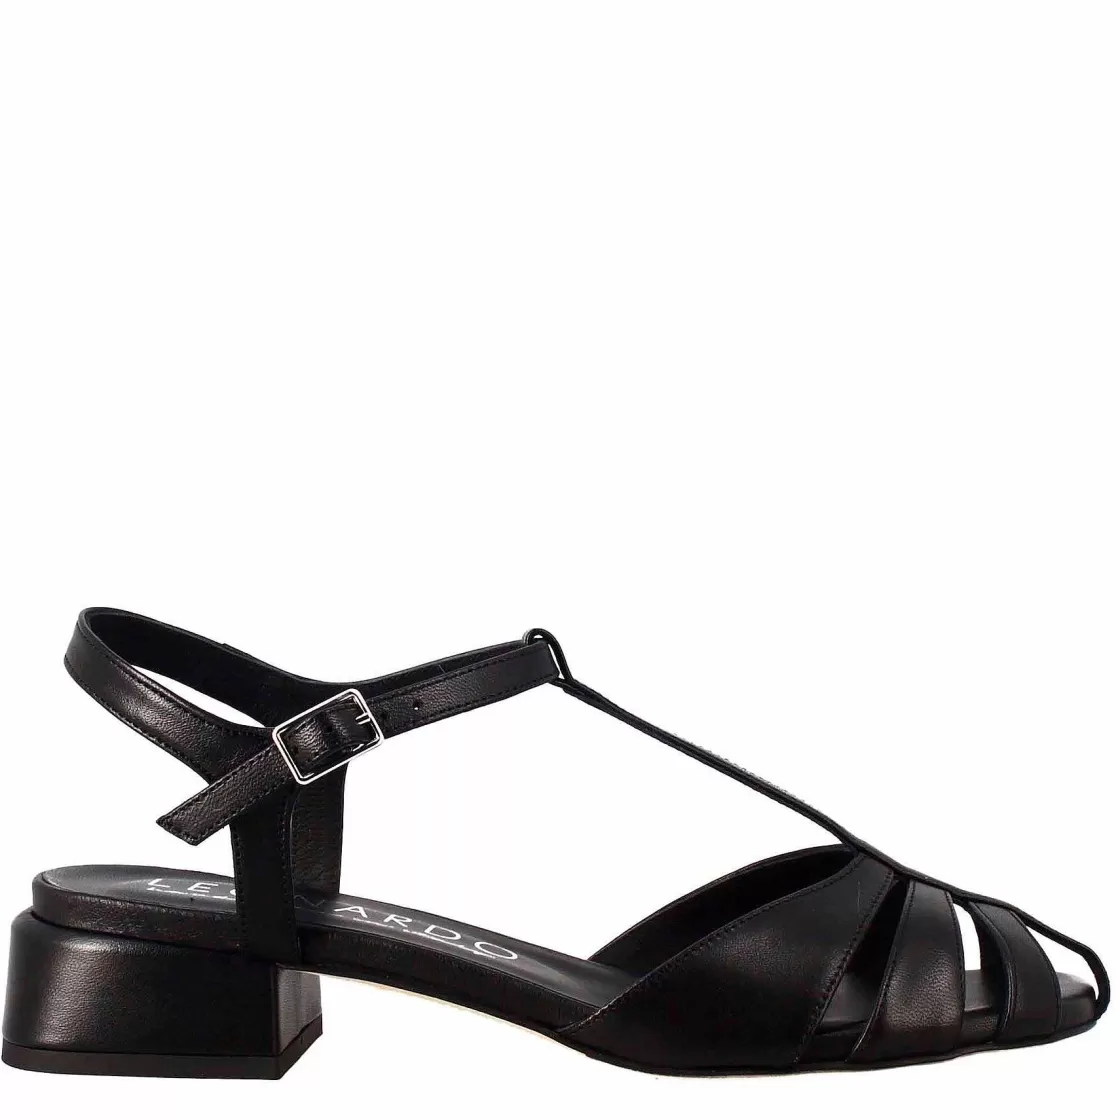 Leonardo Cage-Shaped Black Sandal For Women Discount